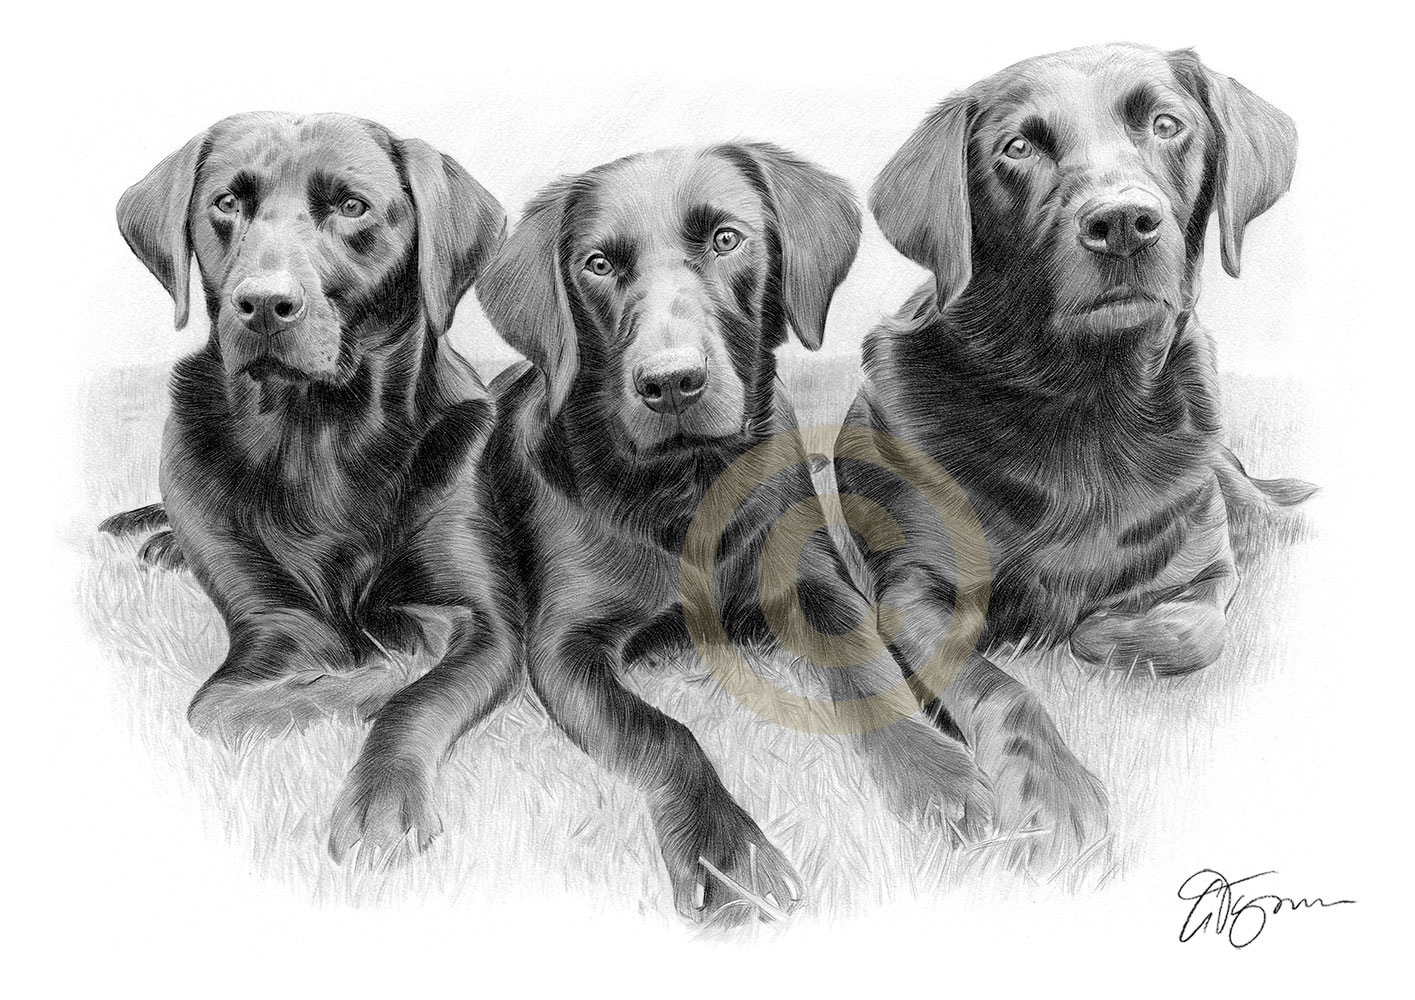 Pencil drawing commission of three black labradors by artist Gary Tymon